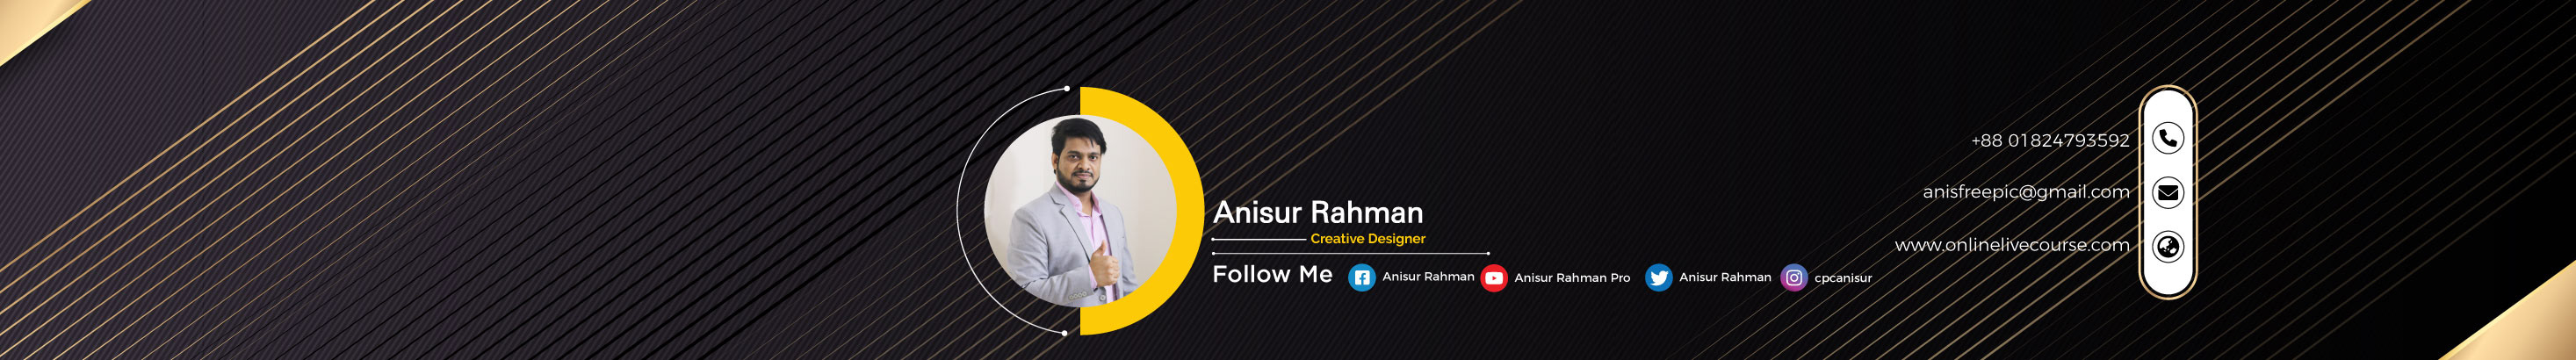 Anisur Rahman 的个人资料横幅